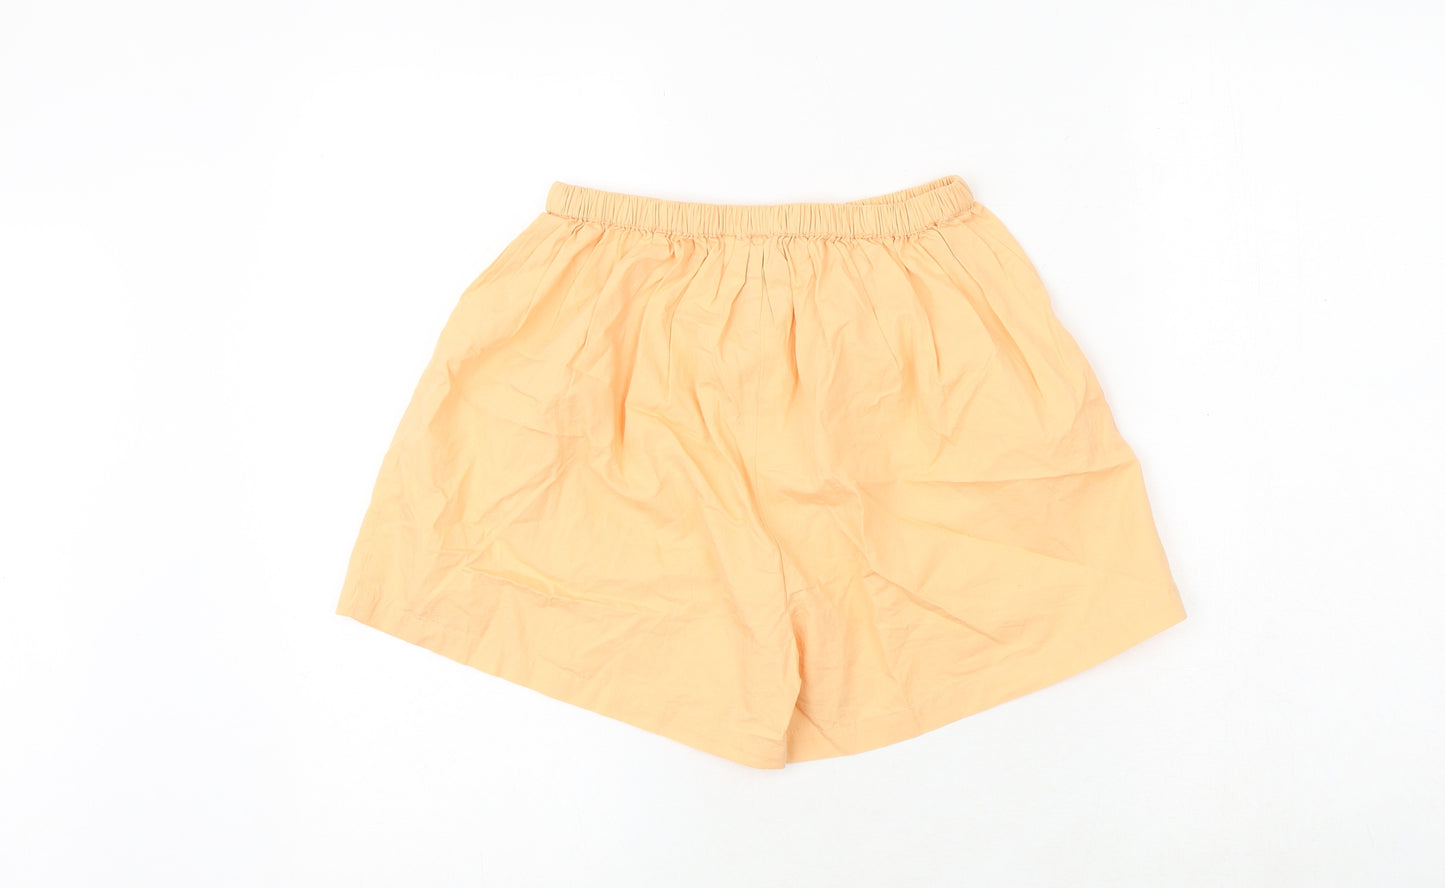 COLLUSION Womens Orange 100% Cotton Basic Shorts Size 6 Regular